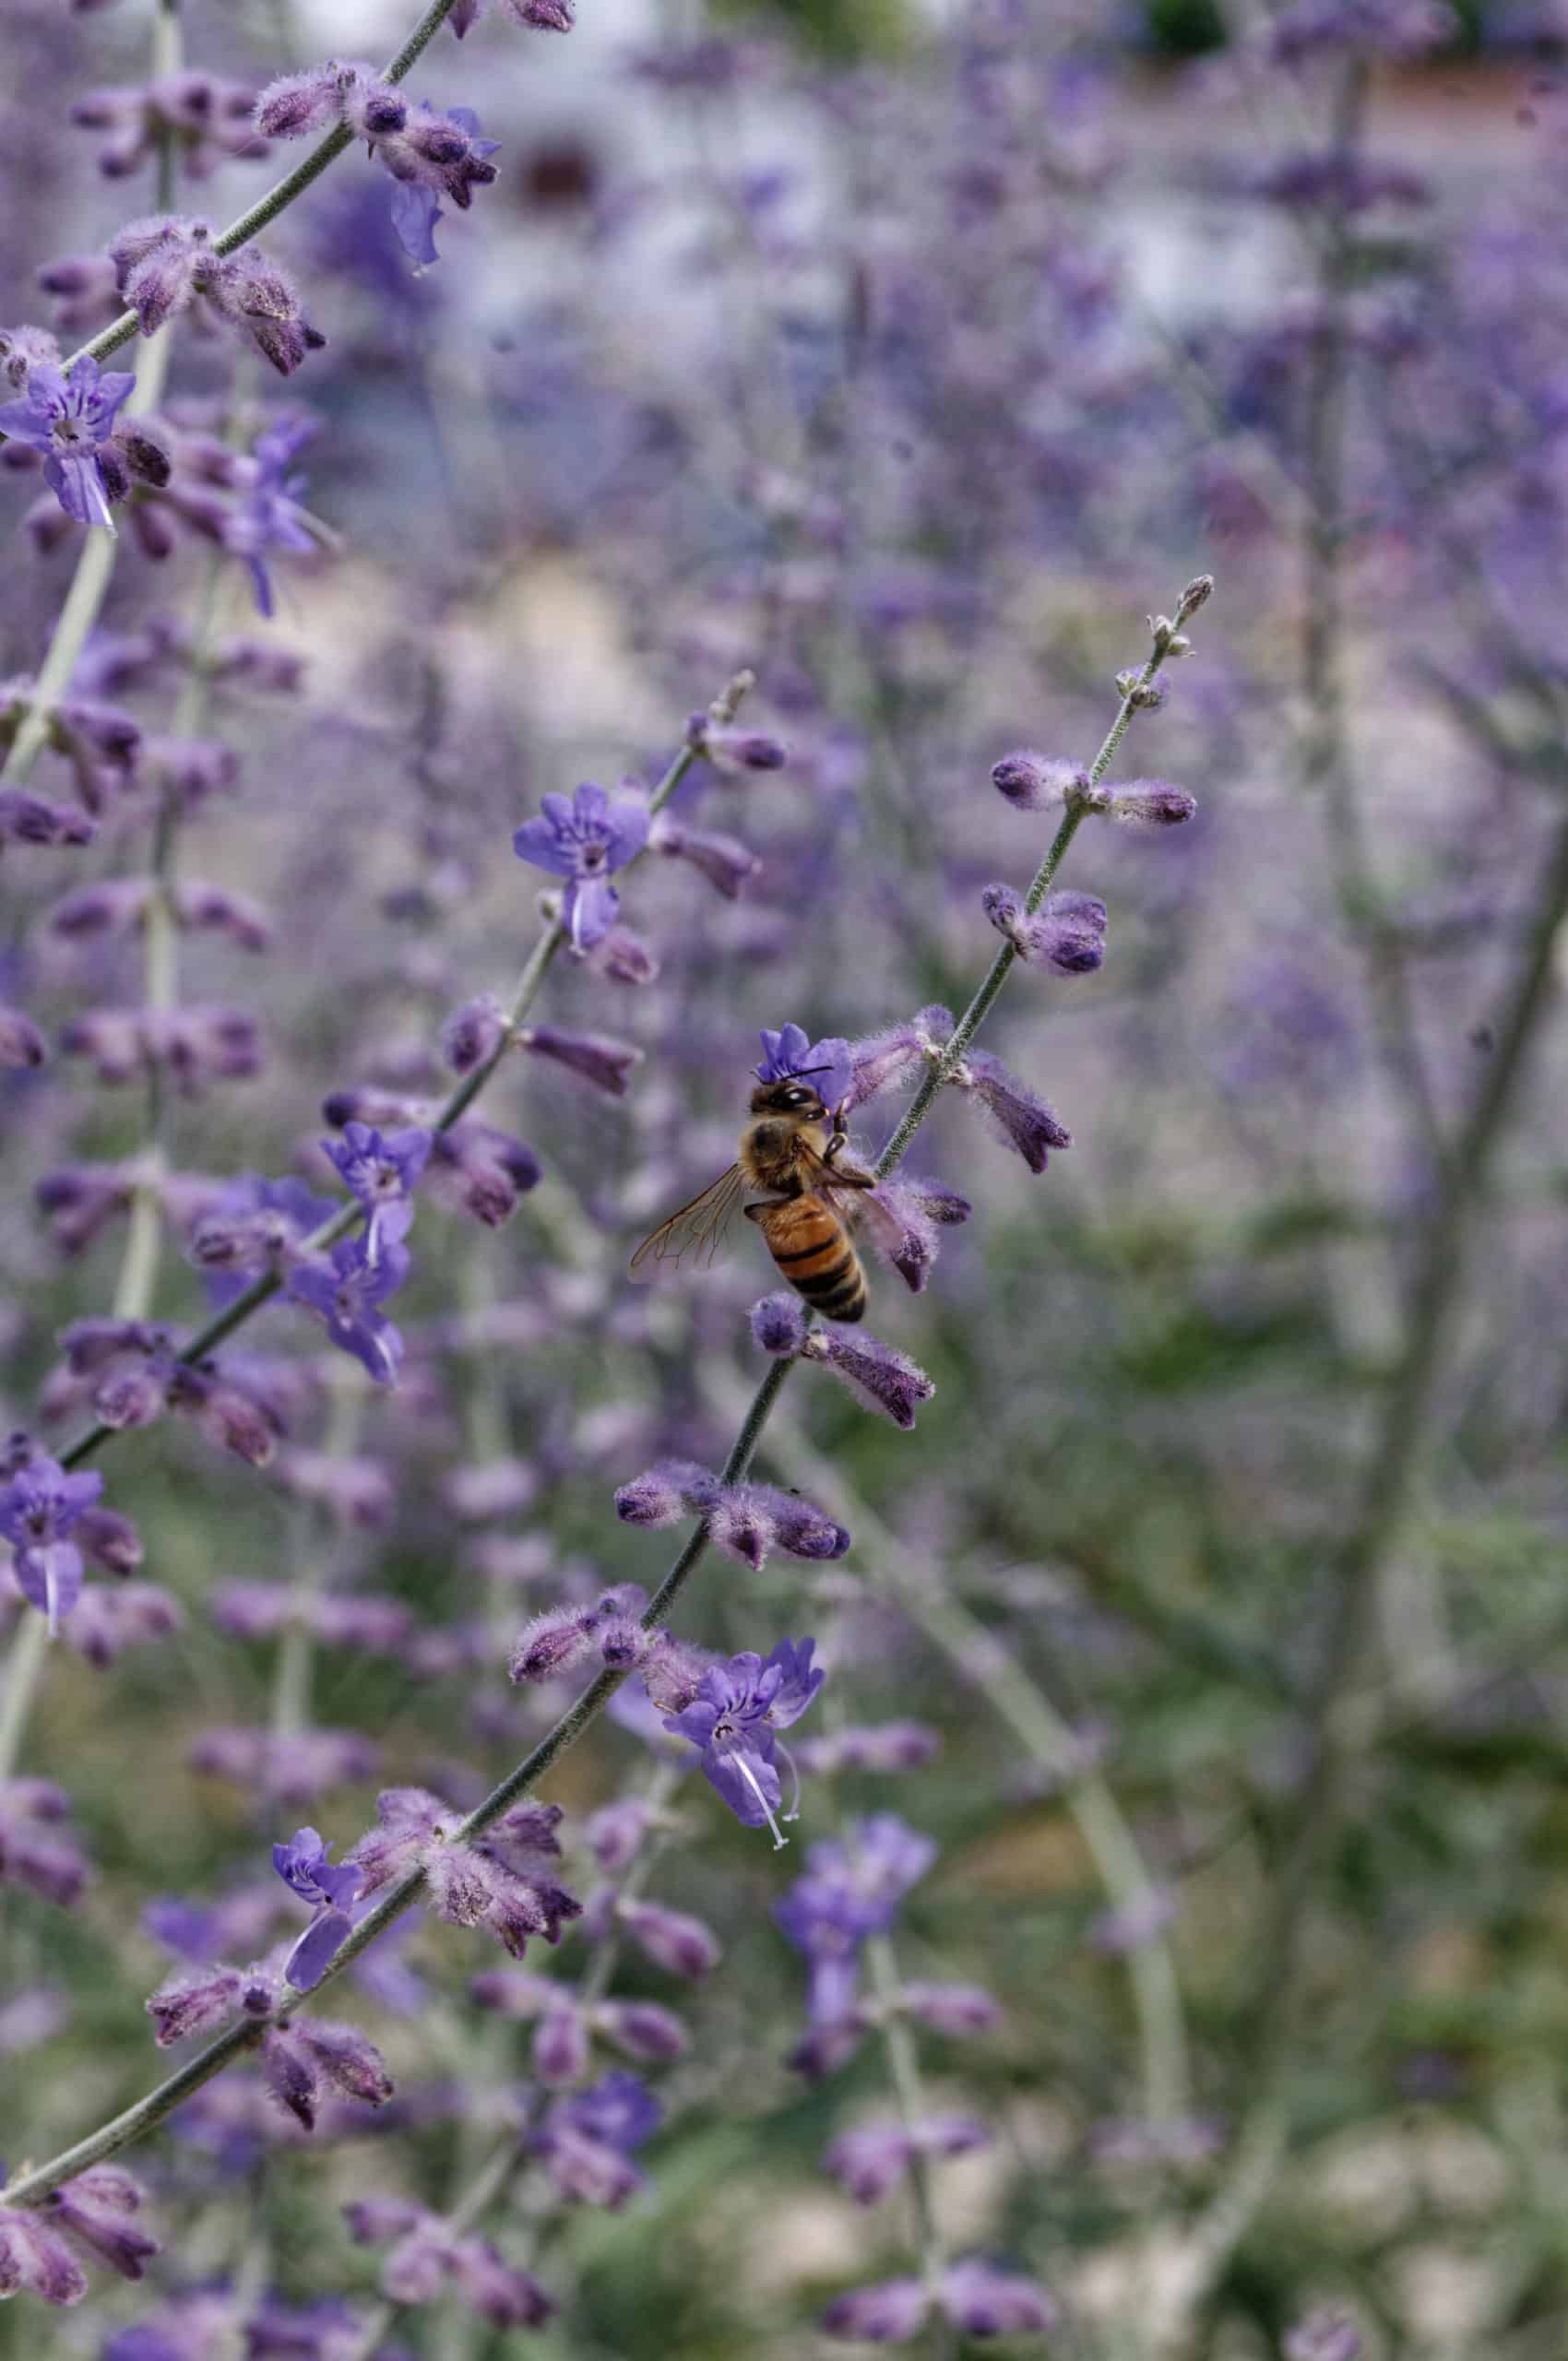 Honeybee on salvia thehoneyreview.com taylor handy